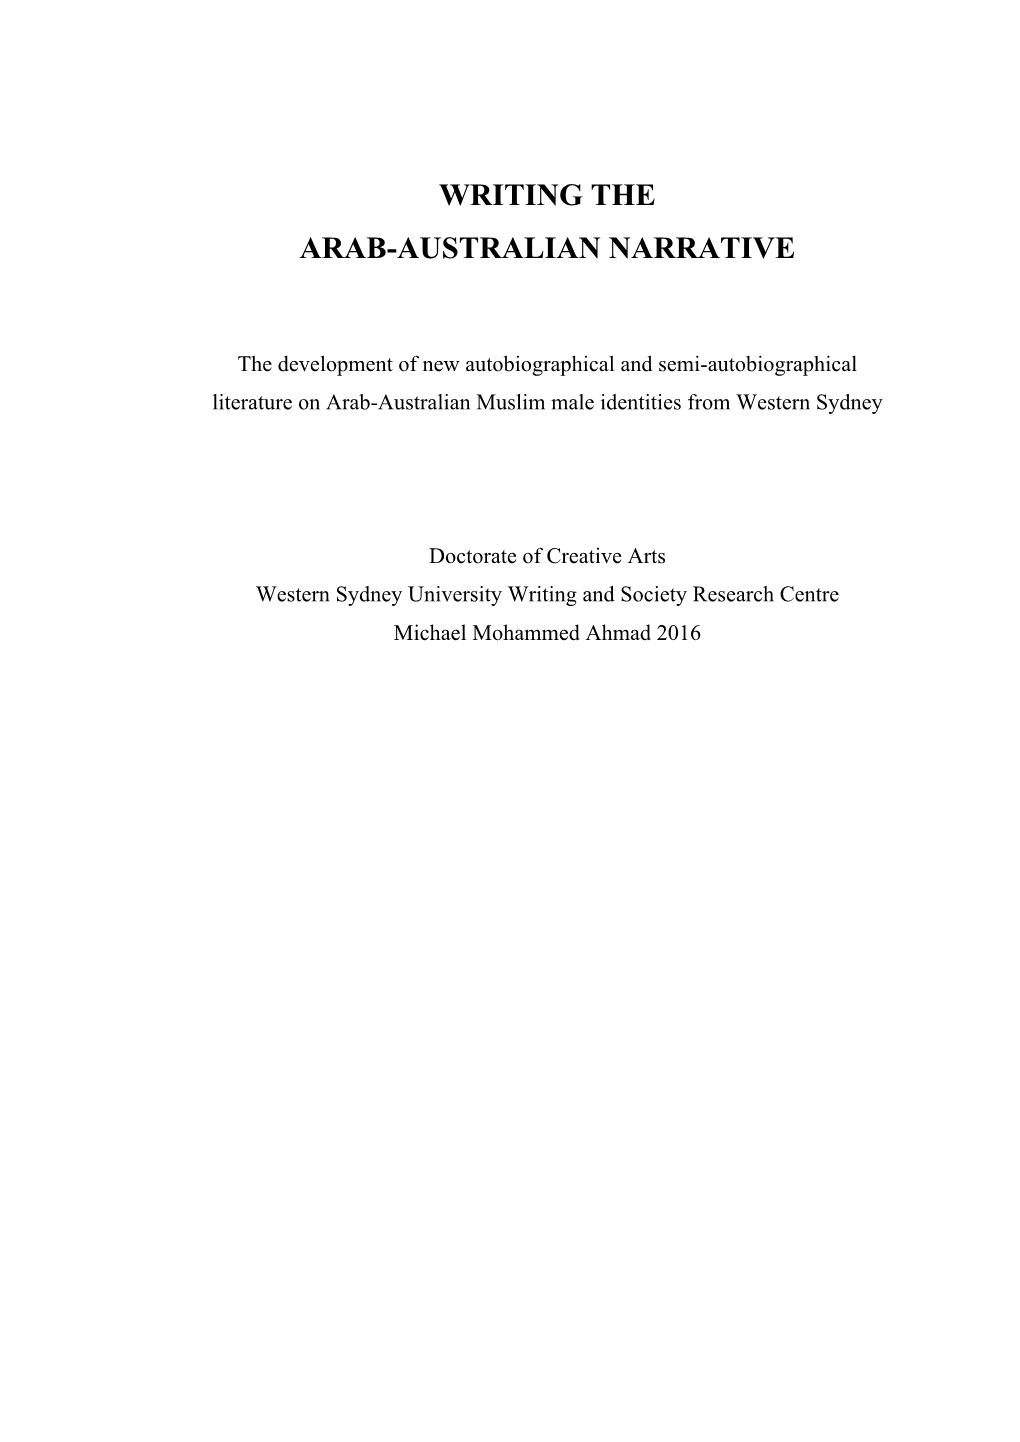 Writing the Arab-Australian Narrative